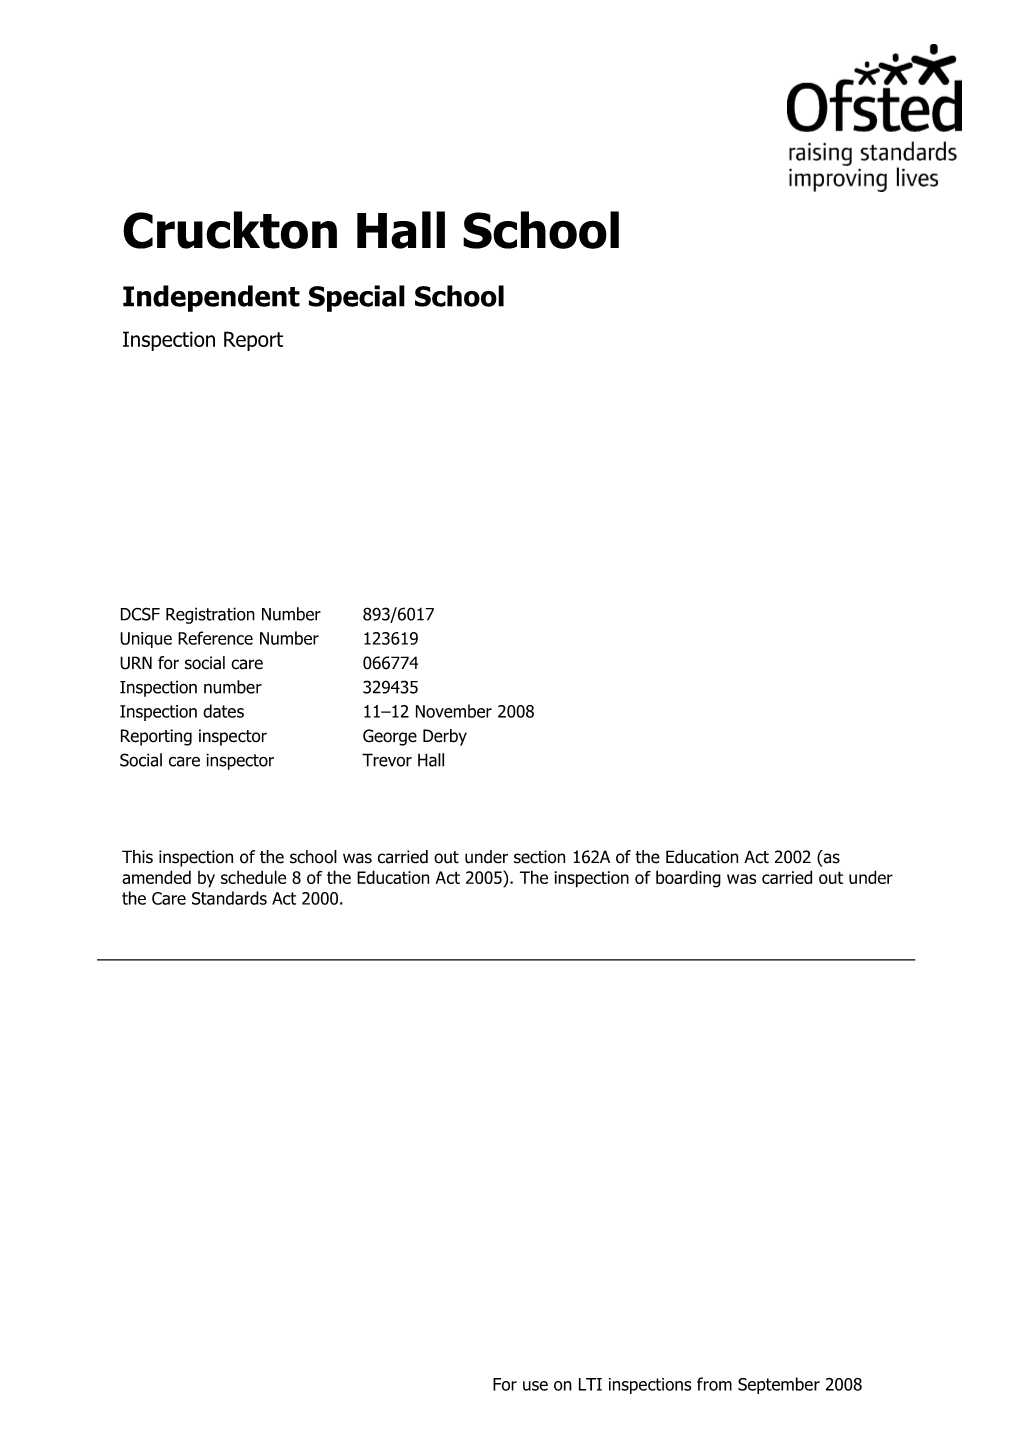 Cruckton Hall School Independent Special School Inspection Report